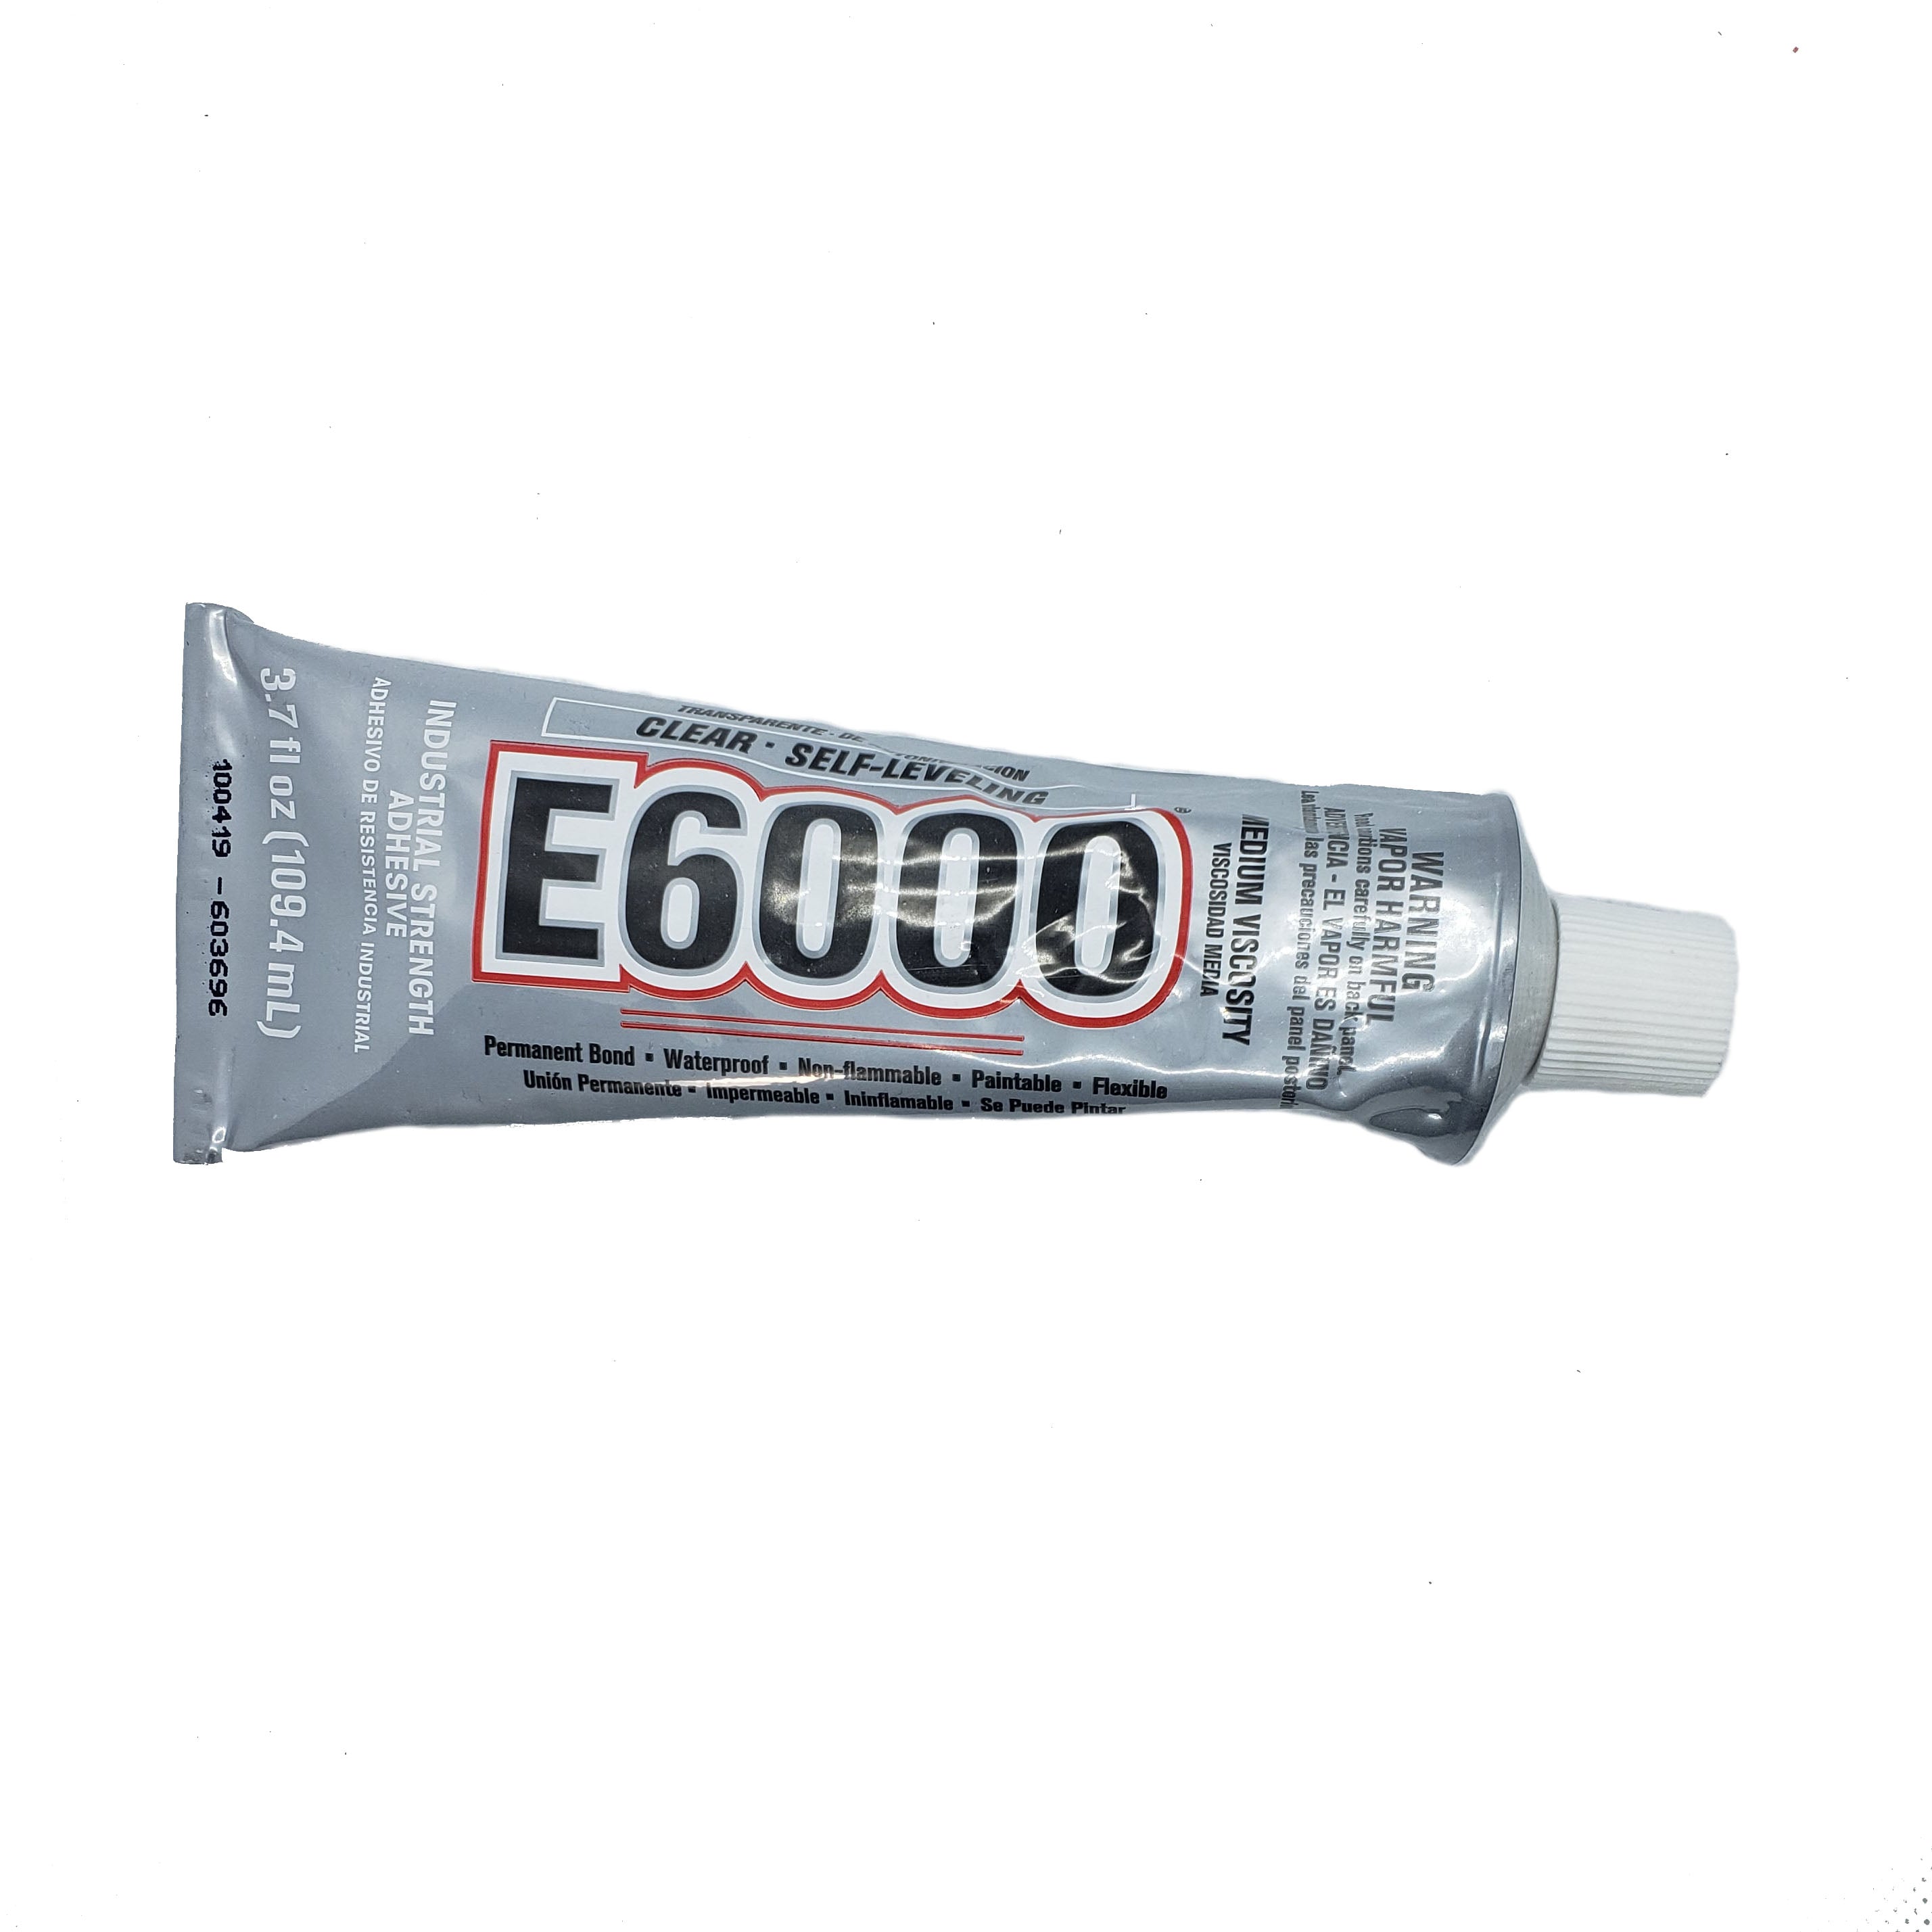 E-6000, jewelry glue, jewelry supplies, jewelry making, adhesive, multi  purpose glues, clear glue, crafters glue